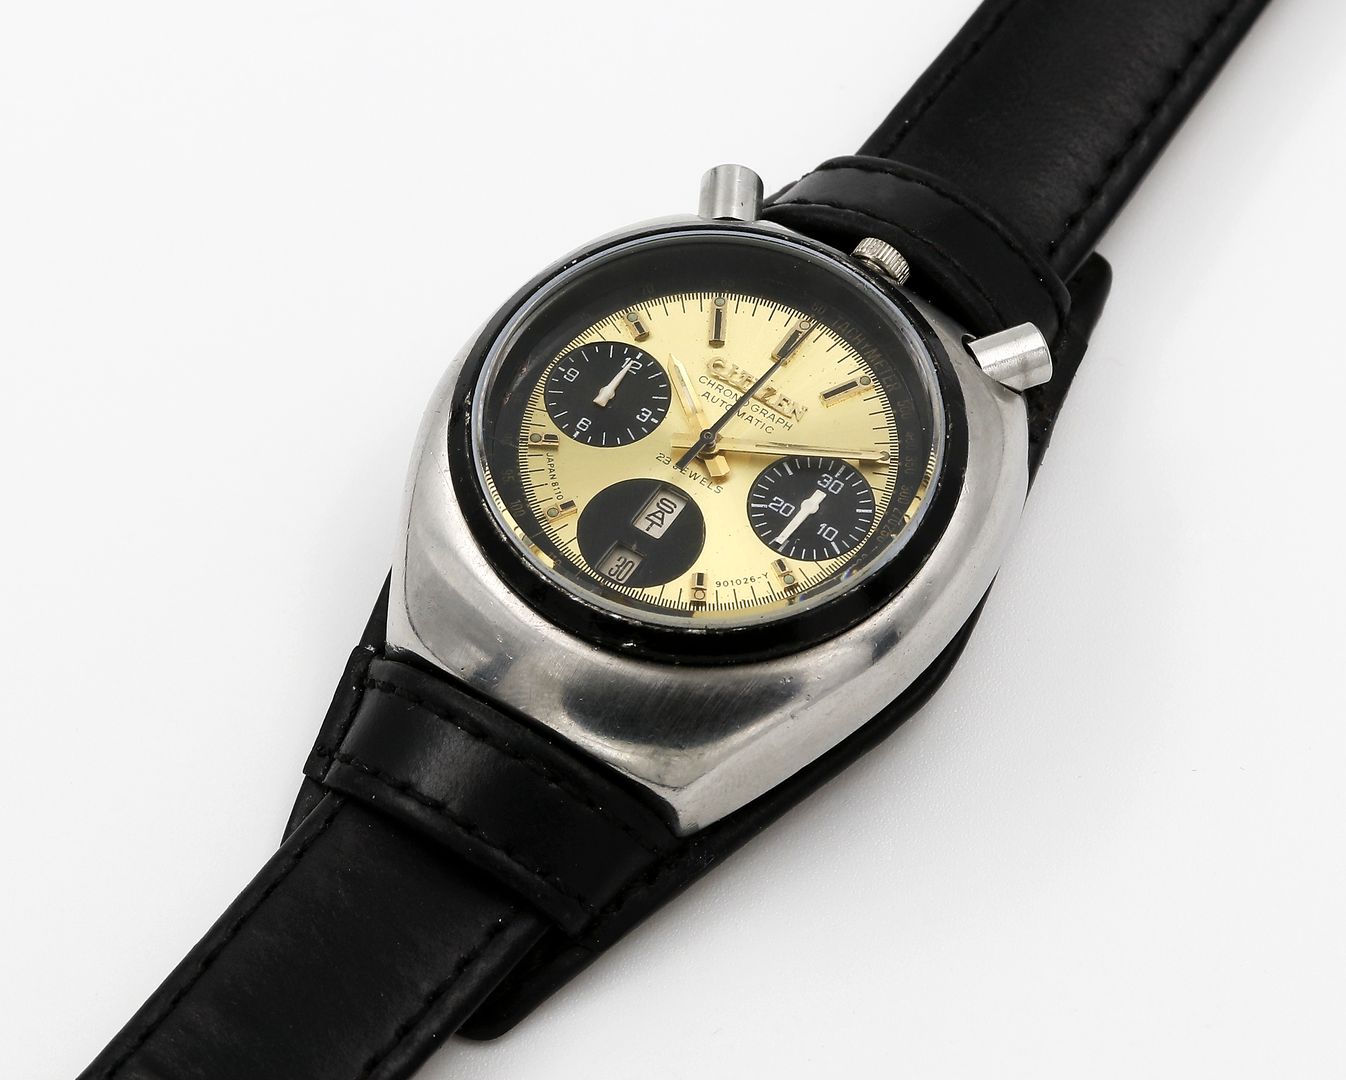 Armbandchronograph "CITIZEN".